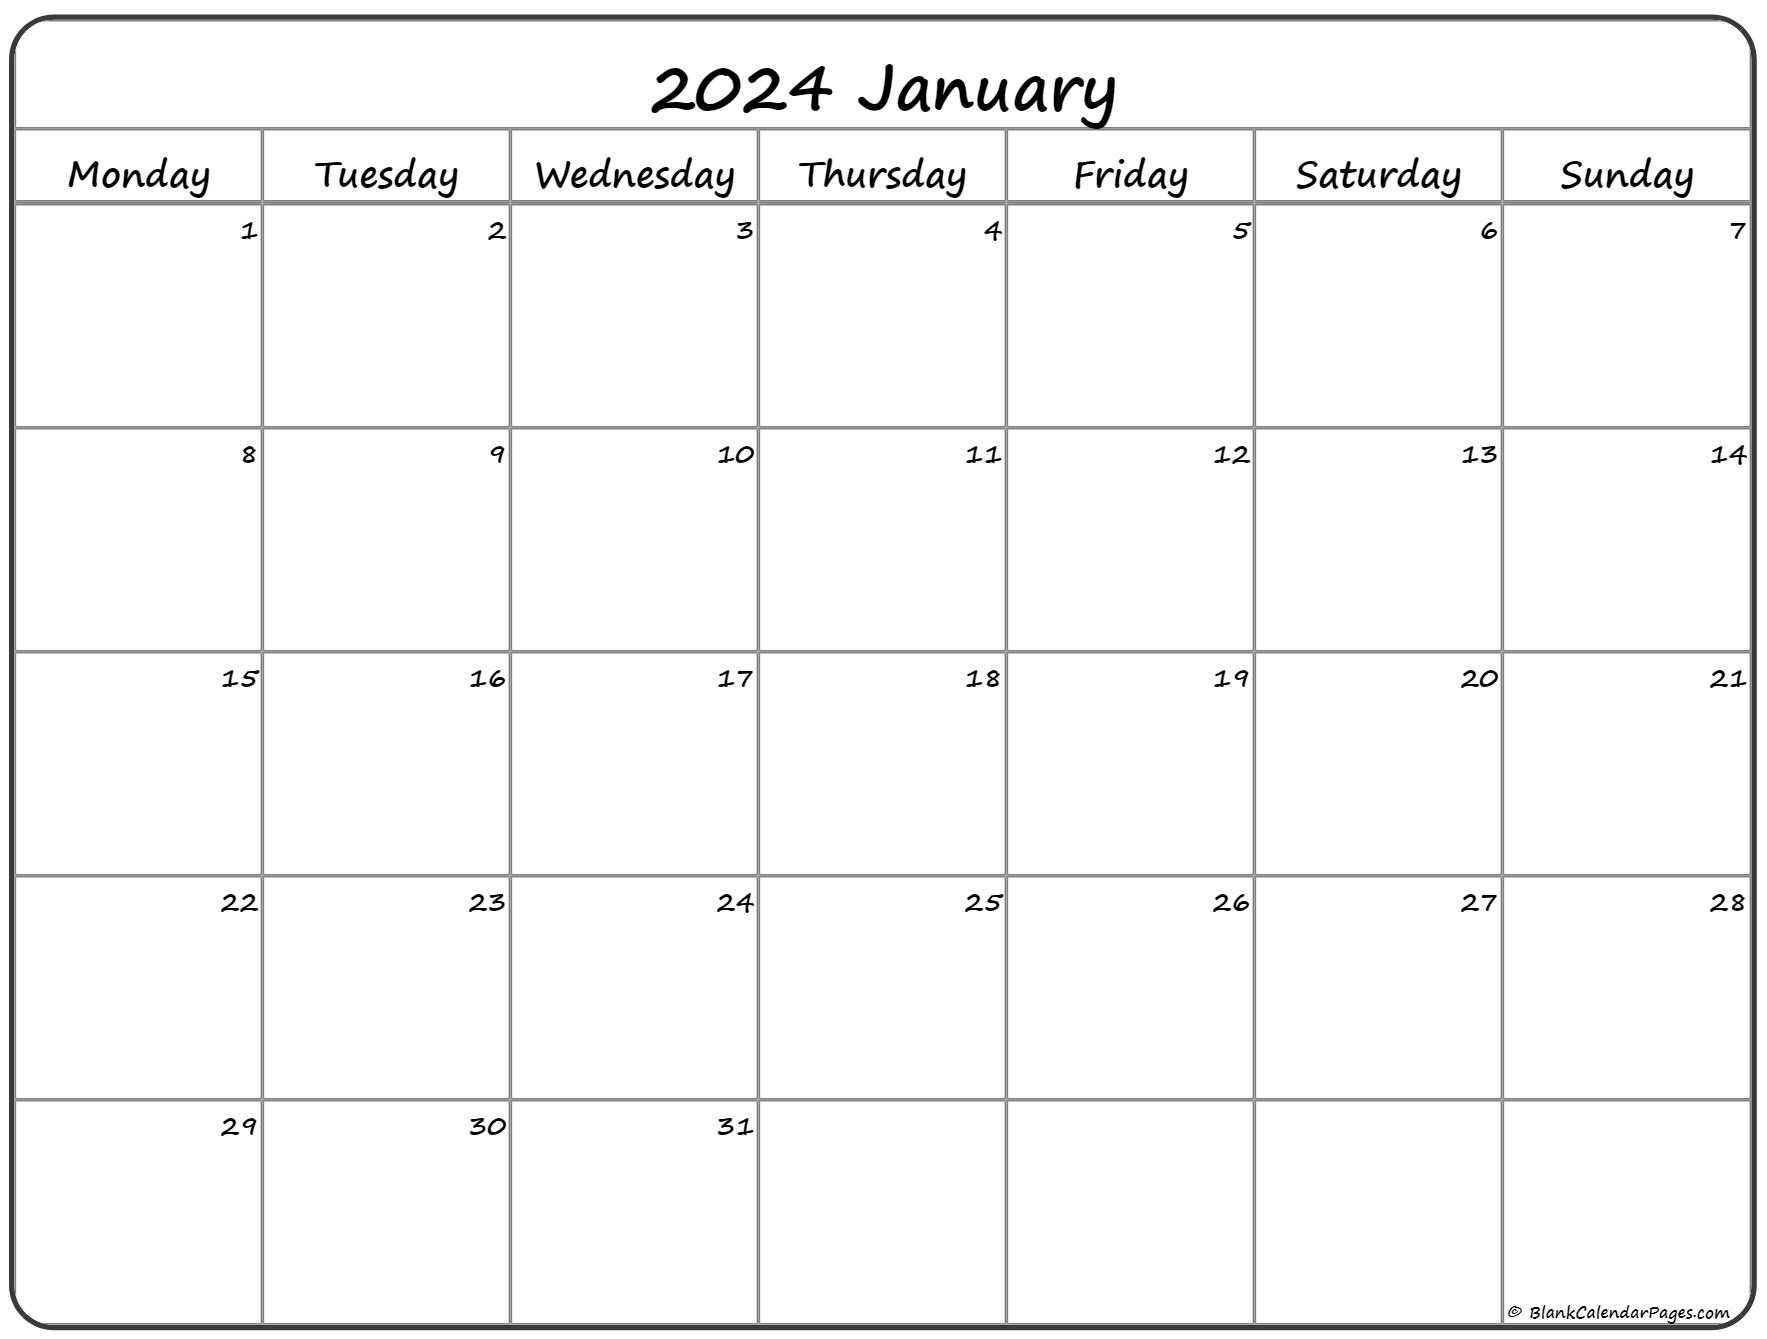 simple calendar 2024 weeks start on monday vector image - monday 2024